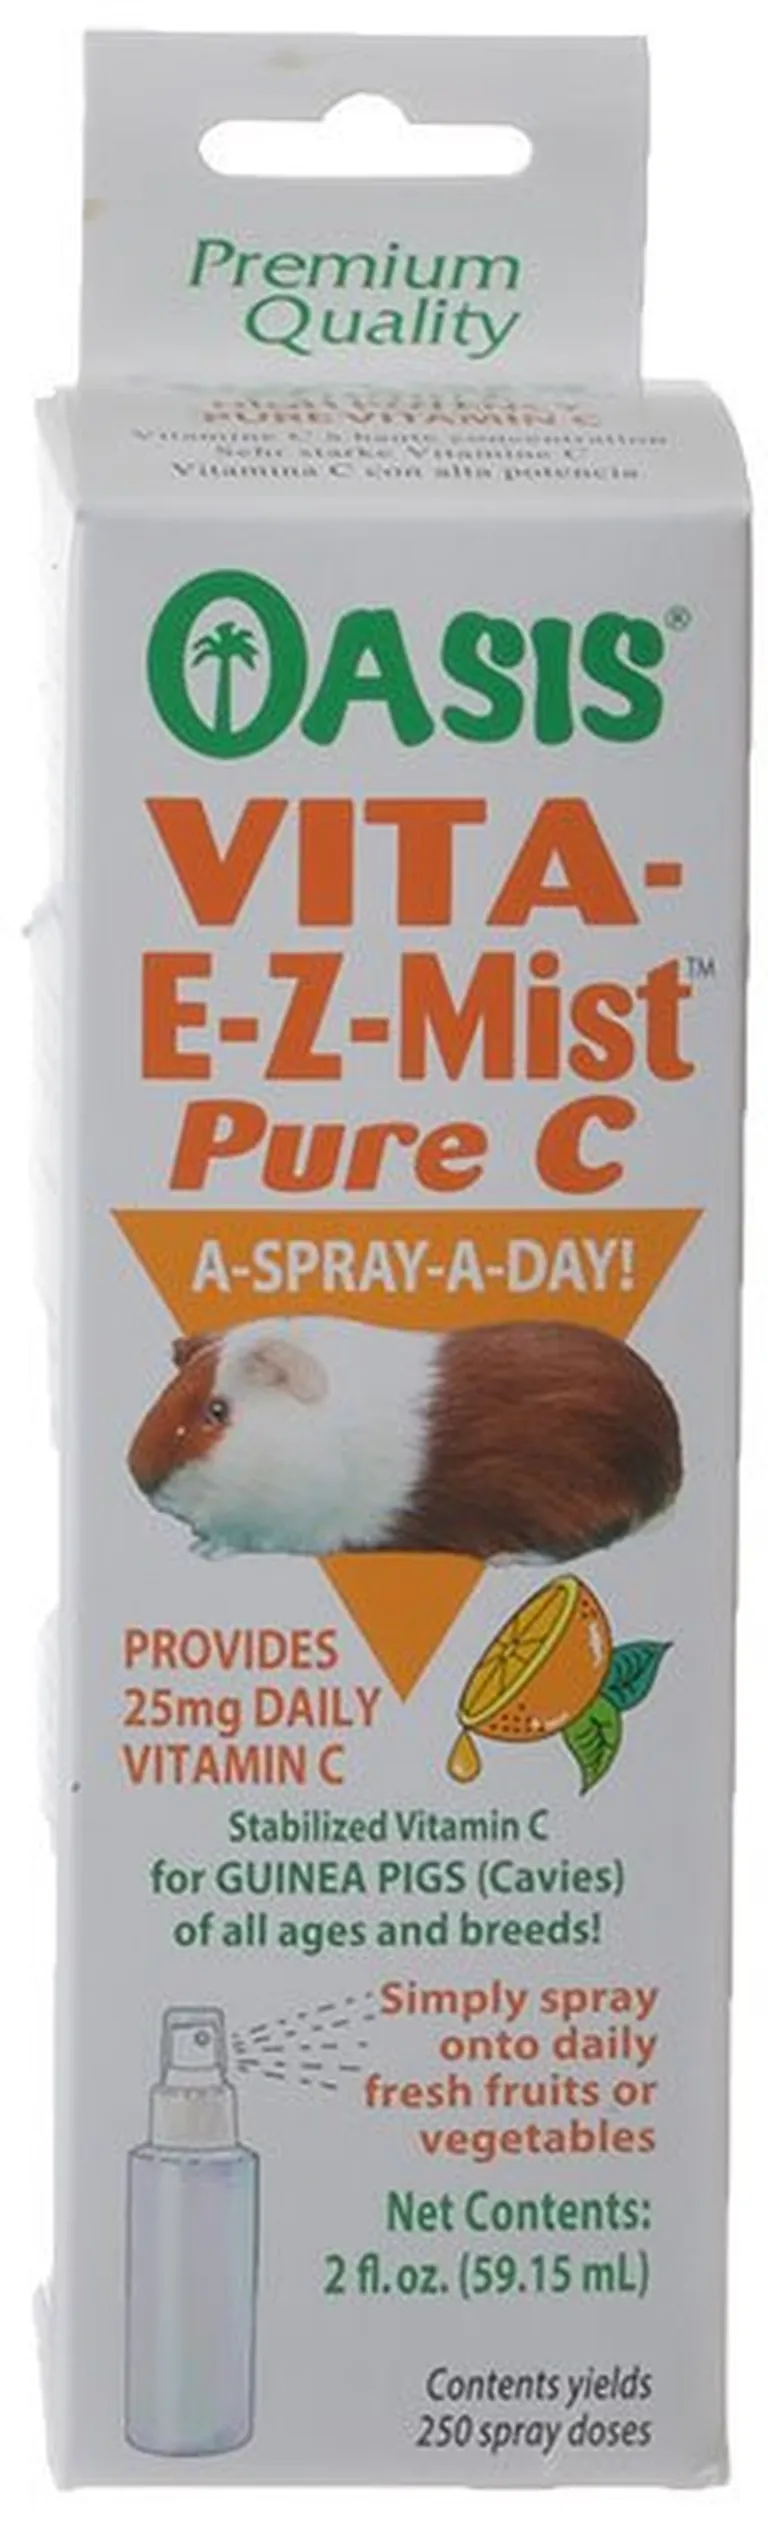 Oasis Vita E-Z-Mist Pure C for Guinea Pigs Photo 1